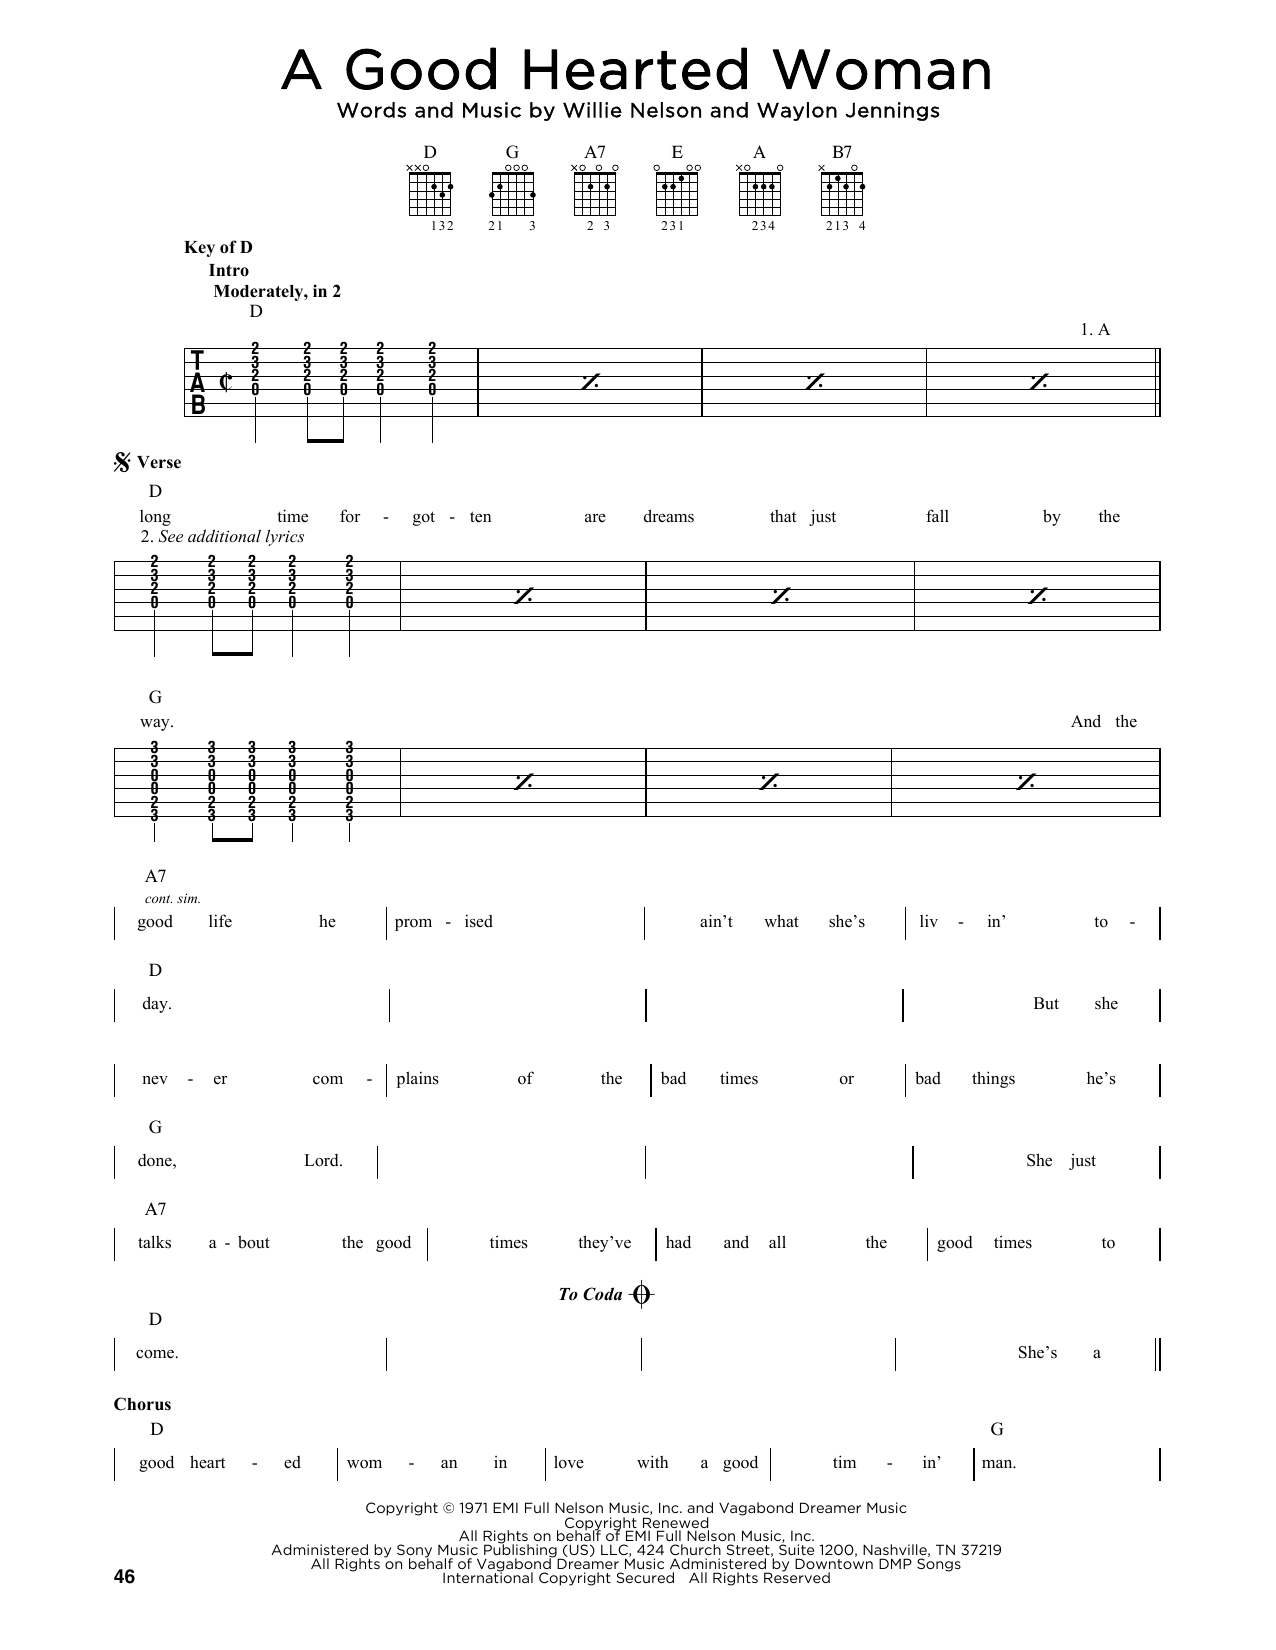 Waylon Jennings & Willie Nelson A Good Hearted Woman sheet music notes printable PDF score